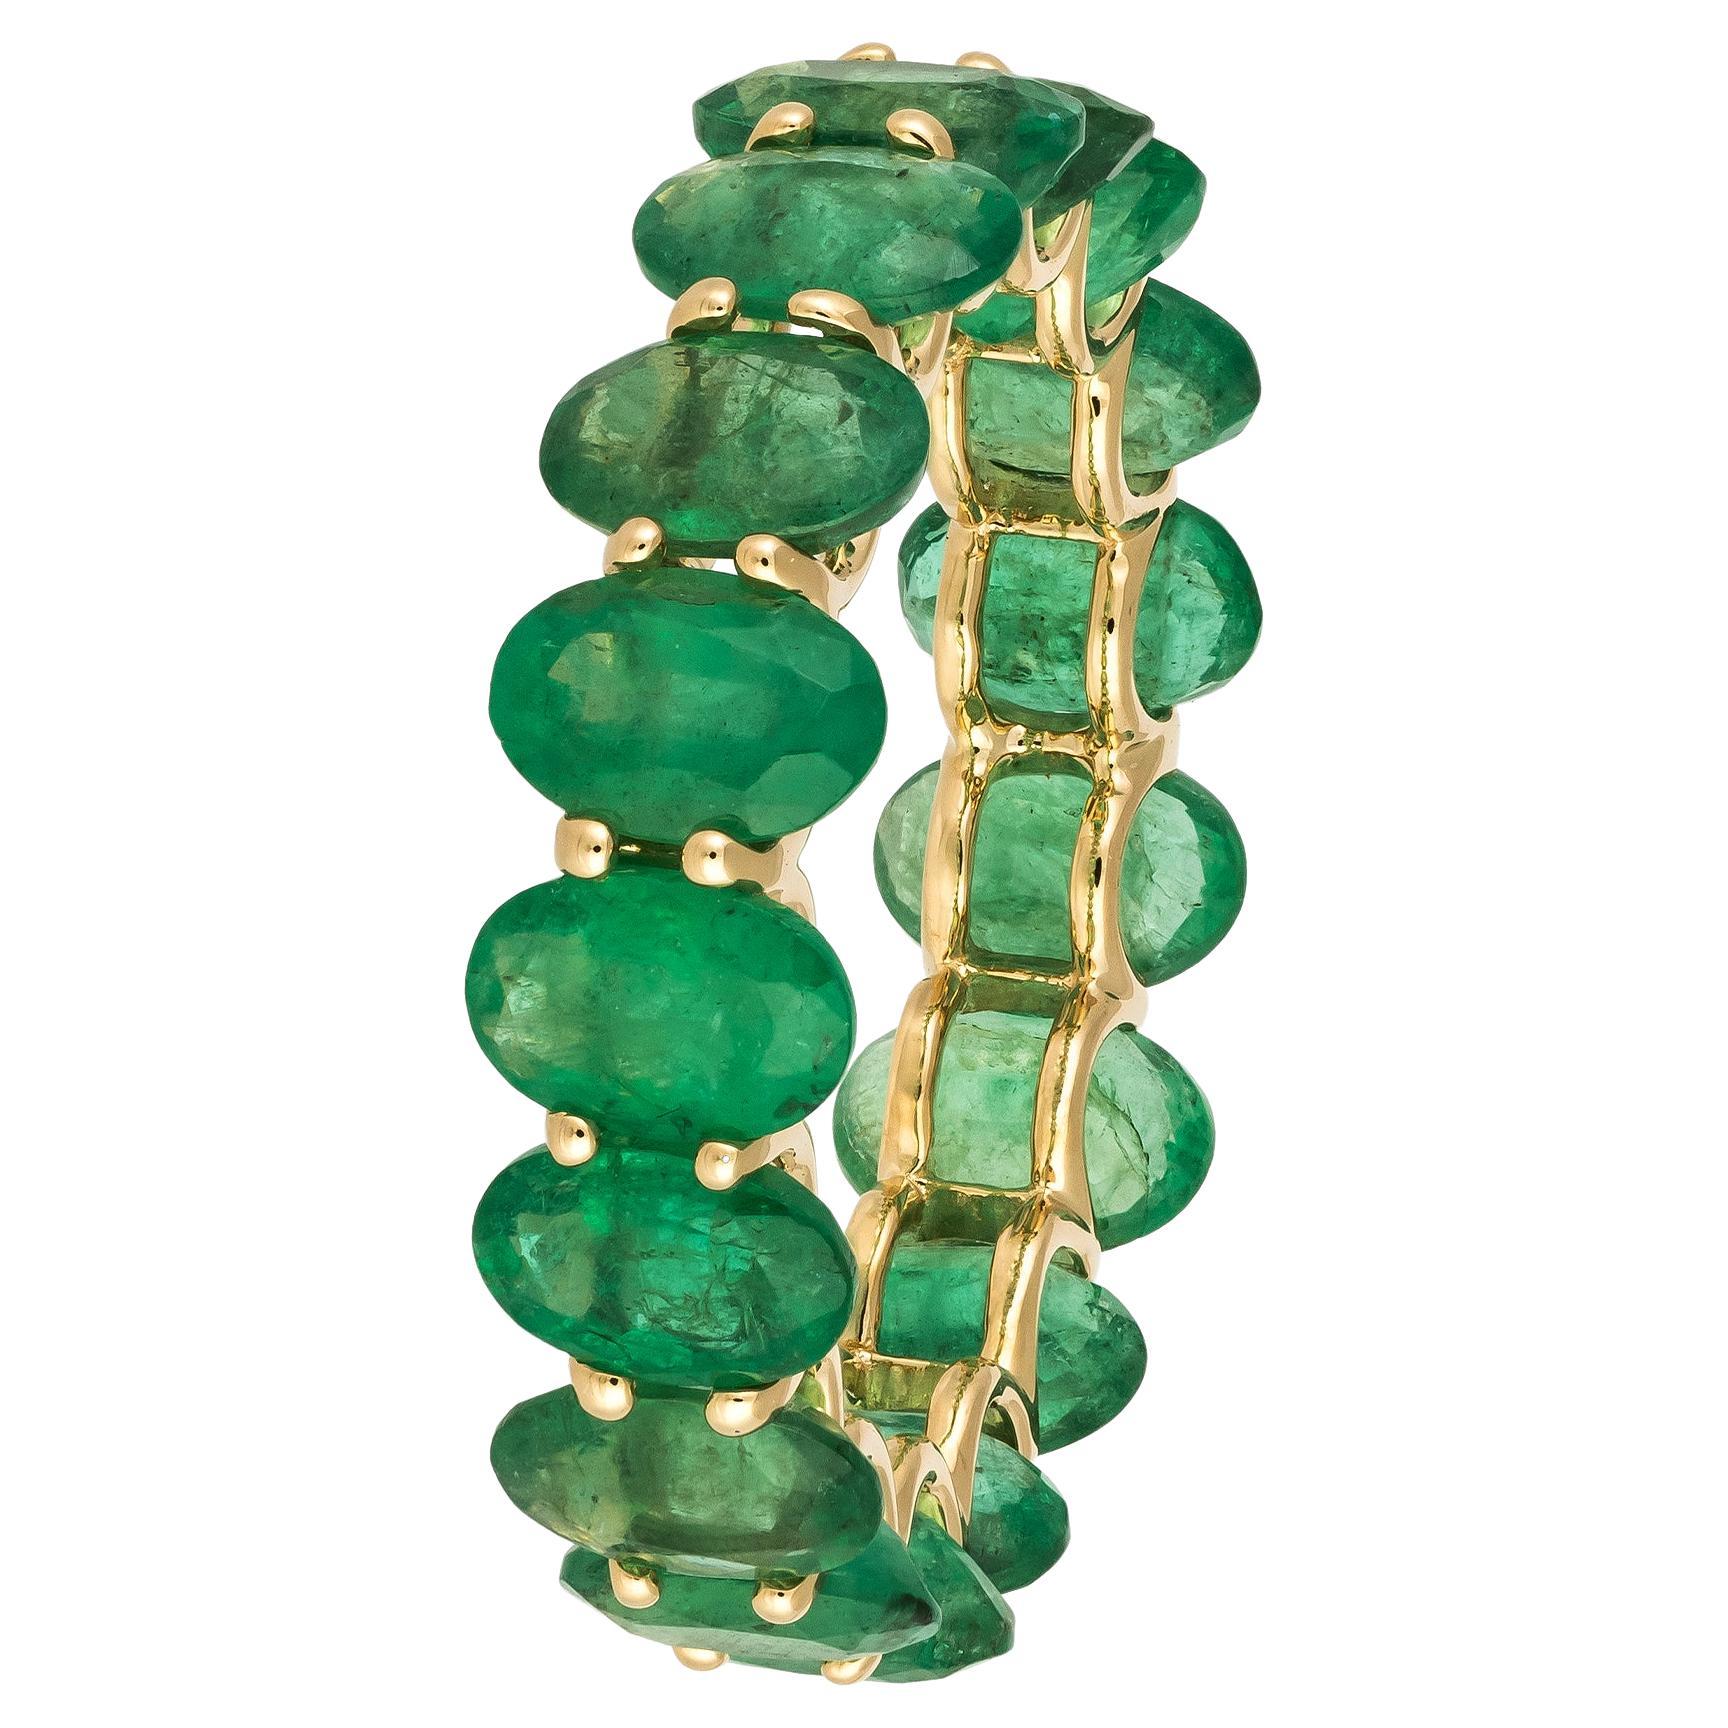 NWT $6500 18KT Gold Fancy Large Glittering Fancy Oval Emerald Eternity Band Ring